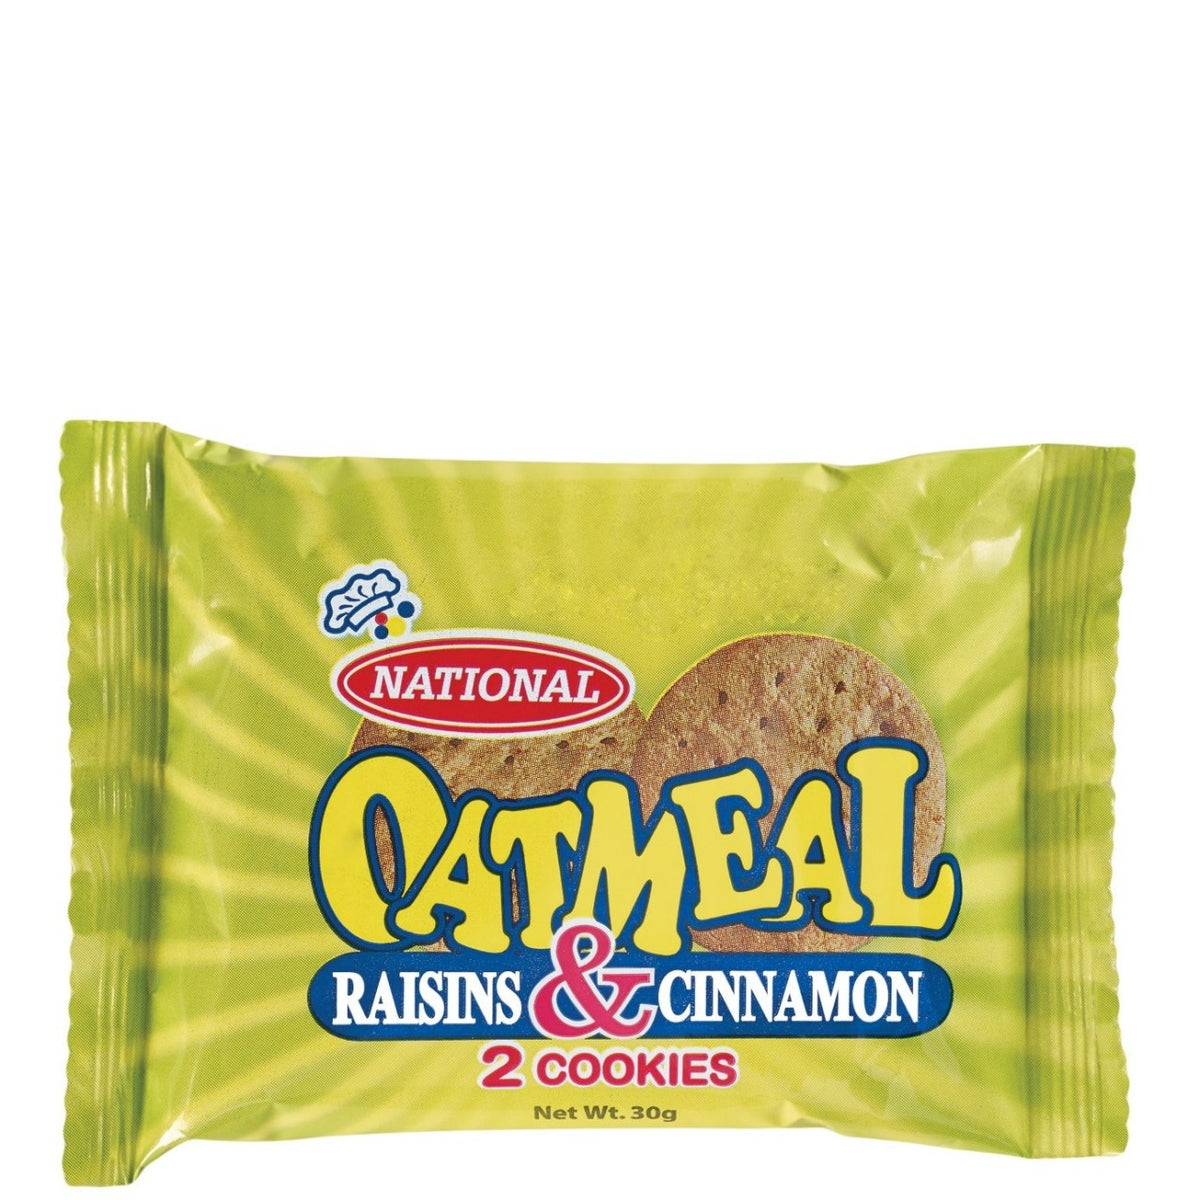 National Oatmeal Cookies